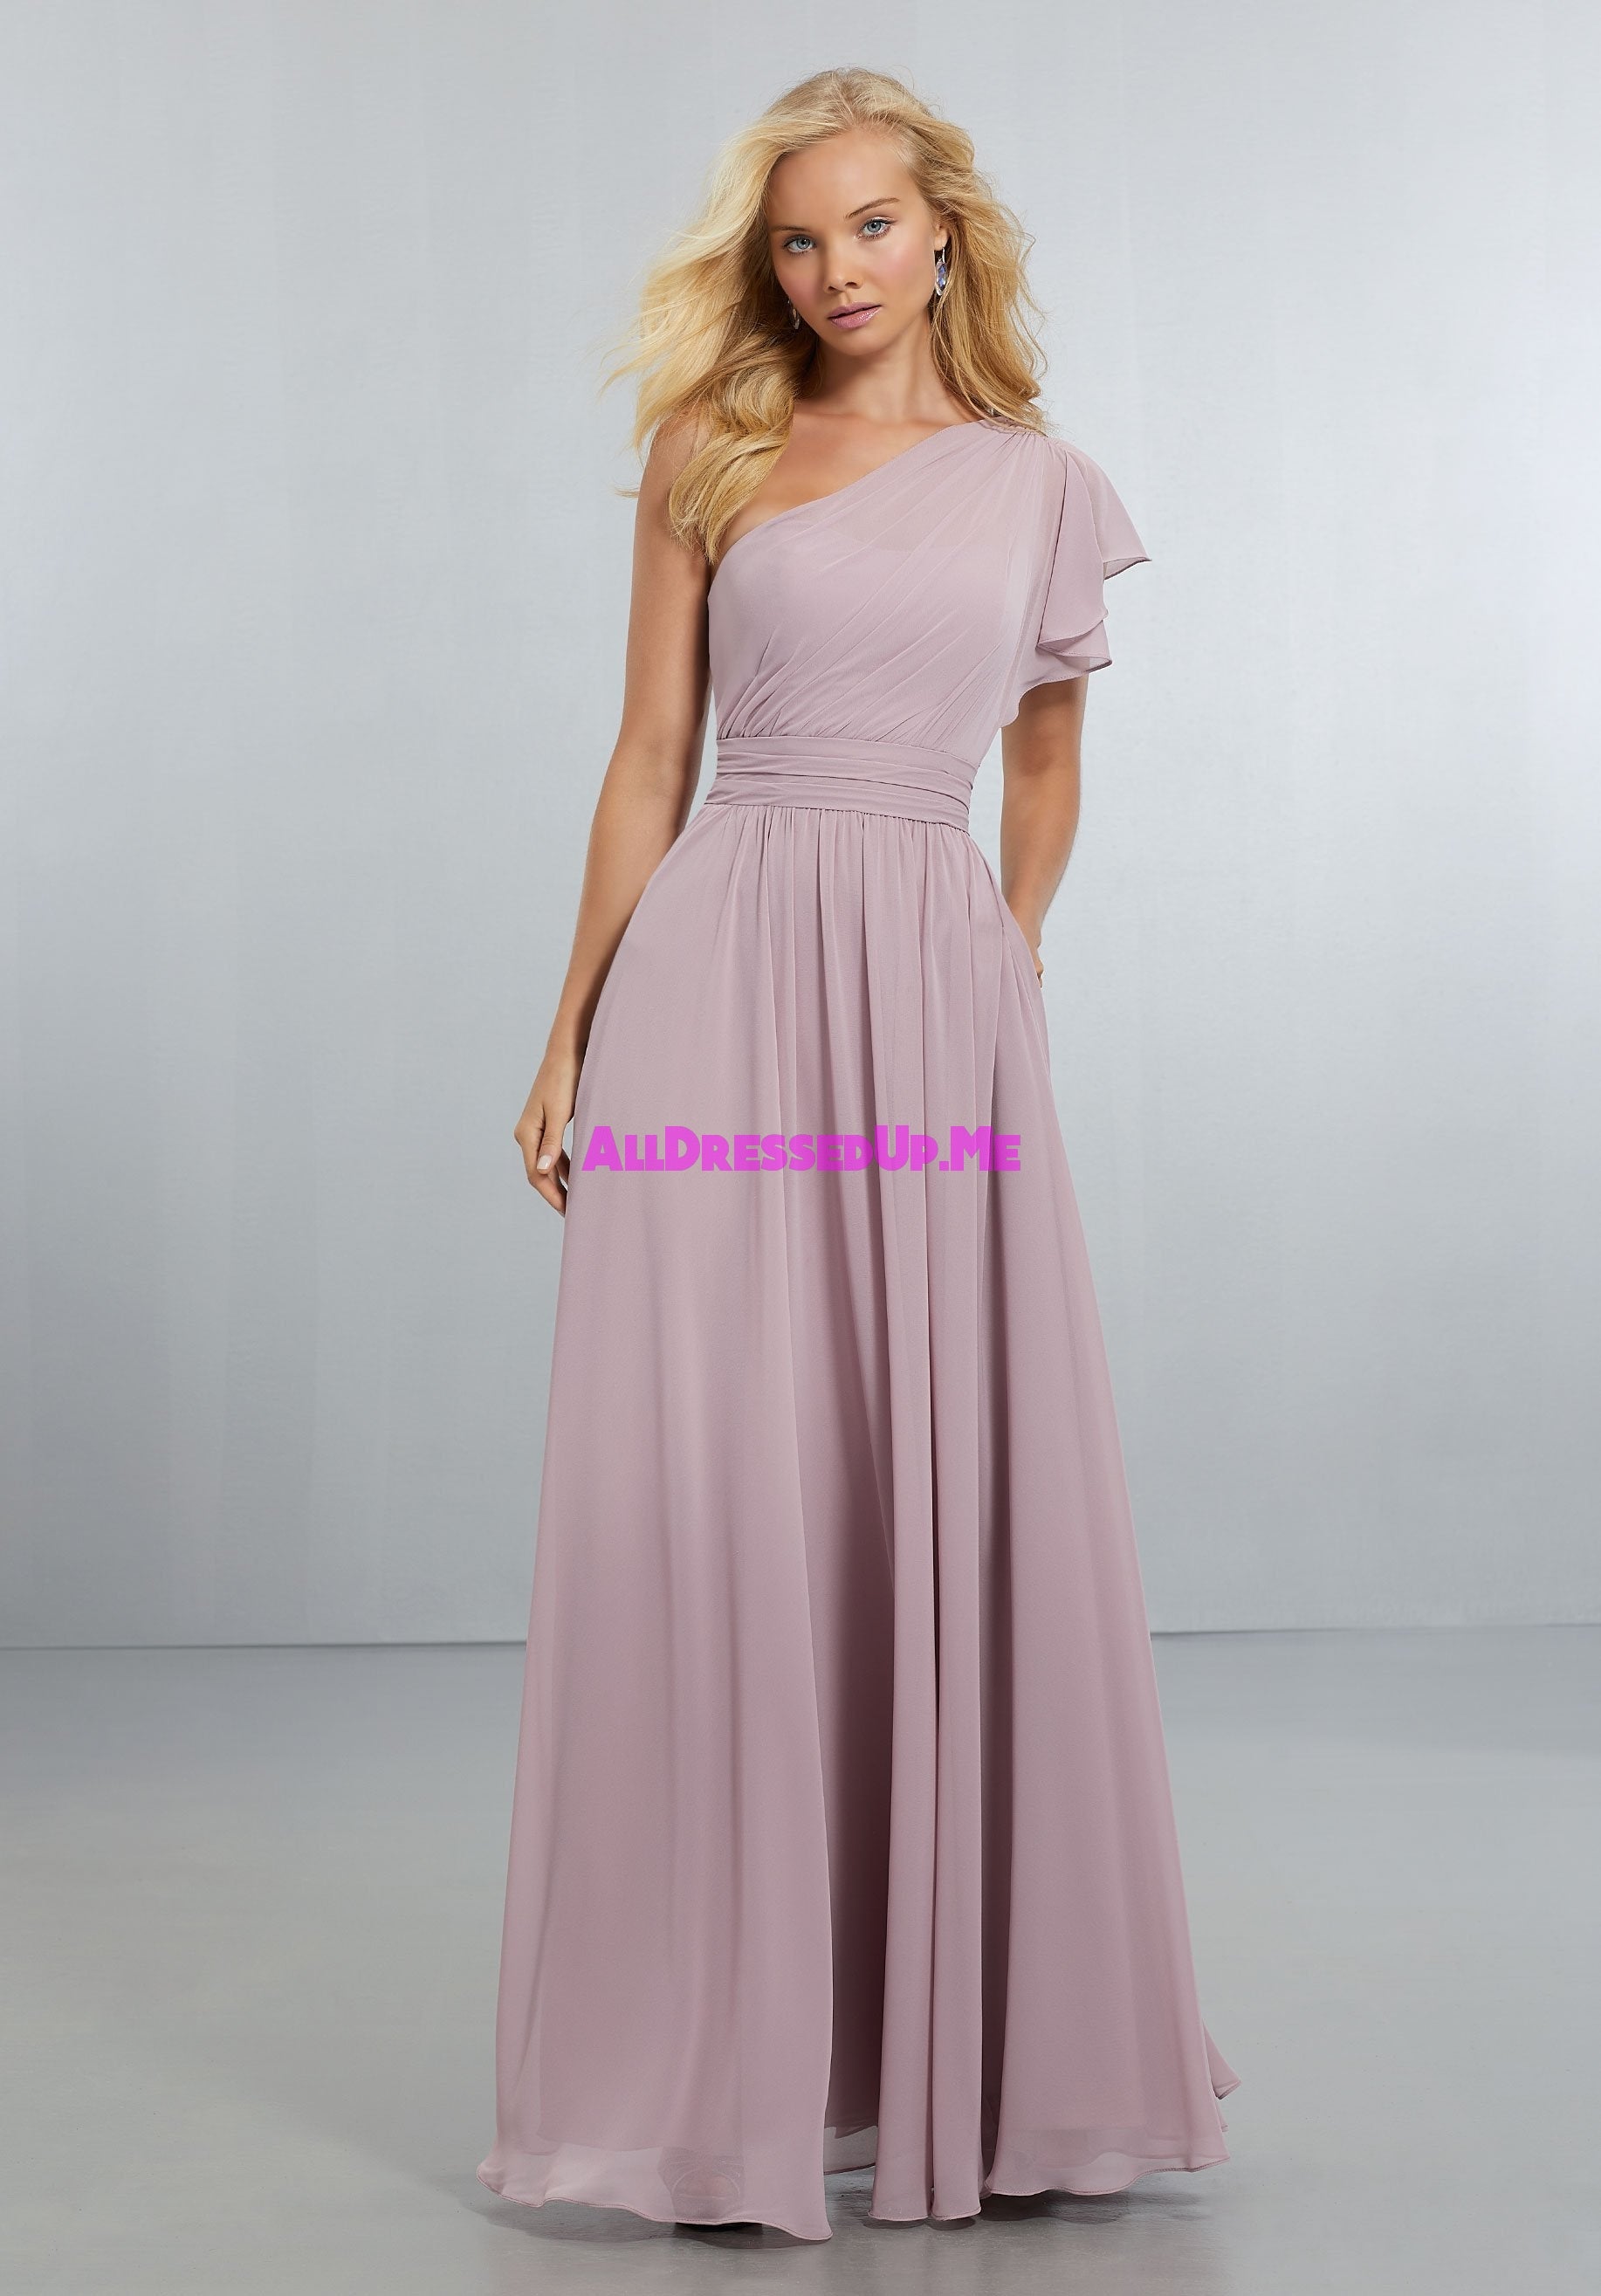 Morilee - 21554 - Cheron's Bridal, Bridesmaids Dress